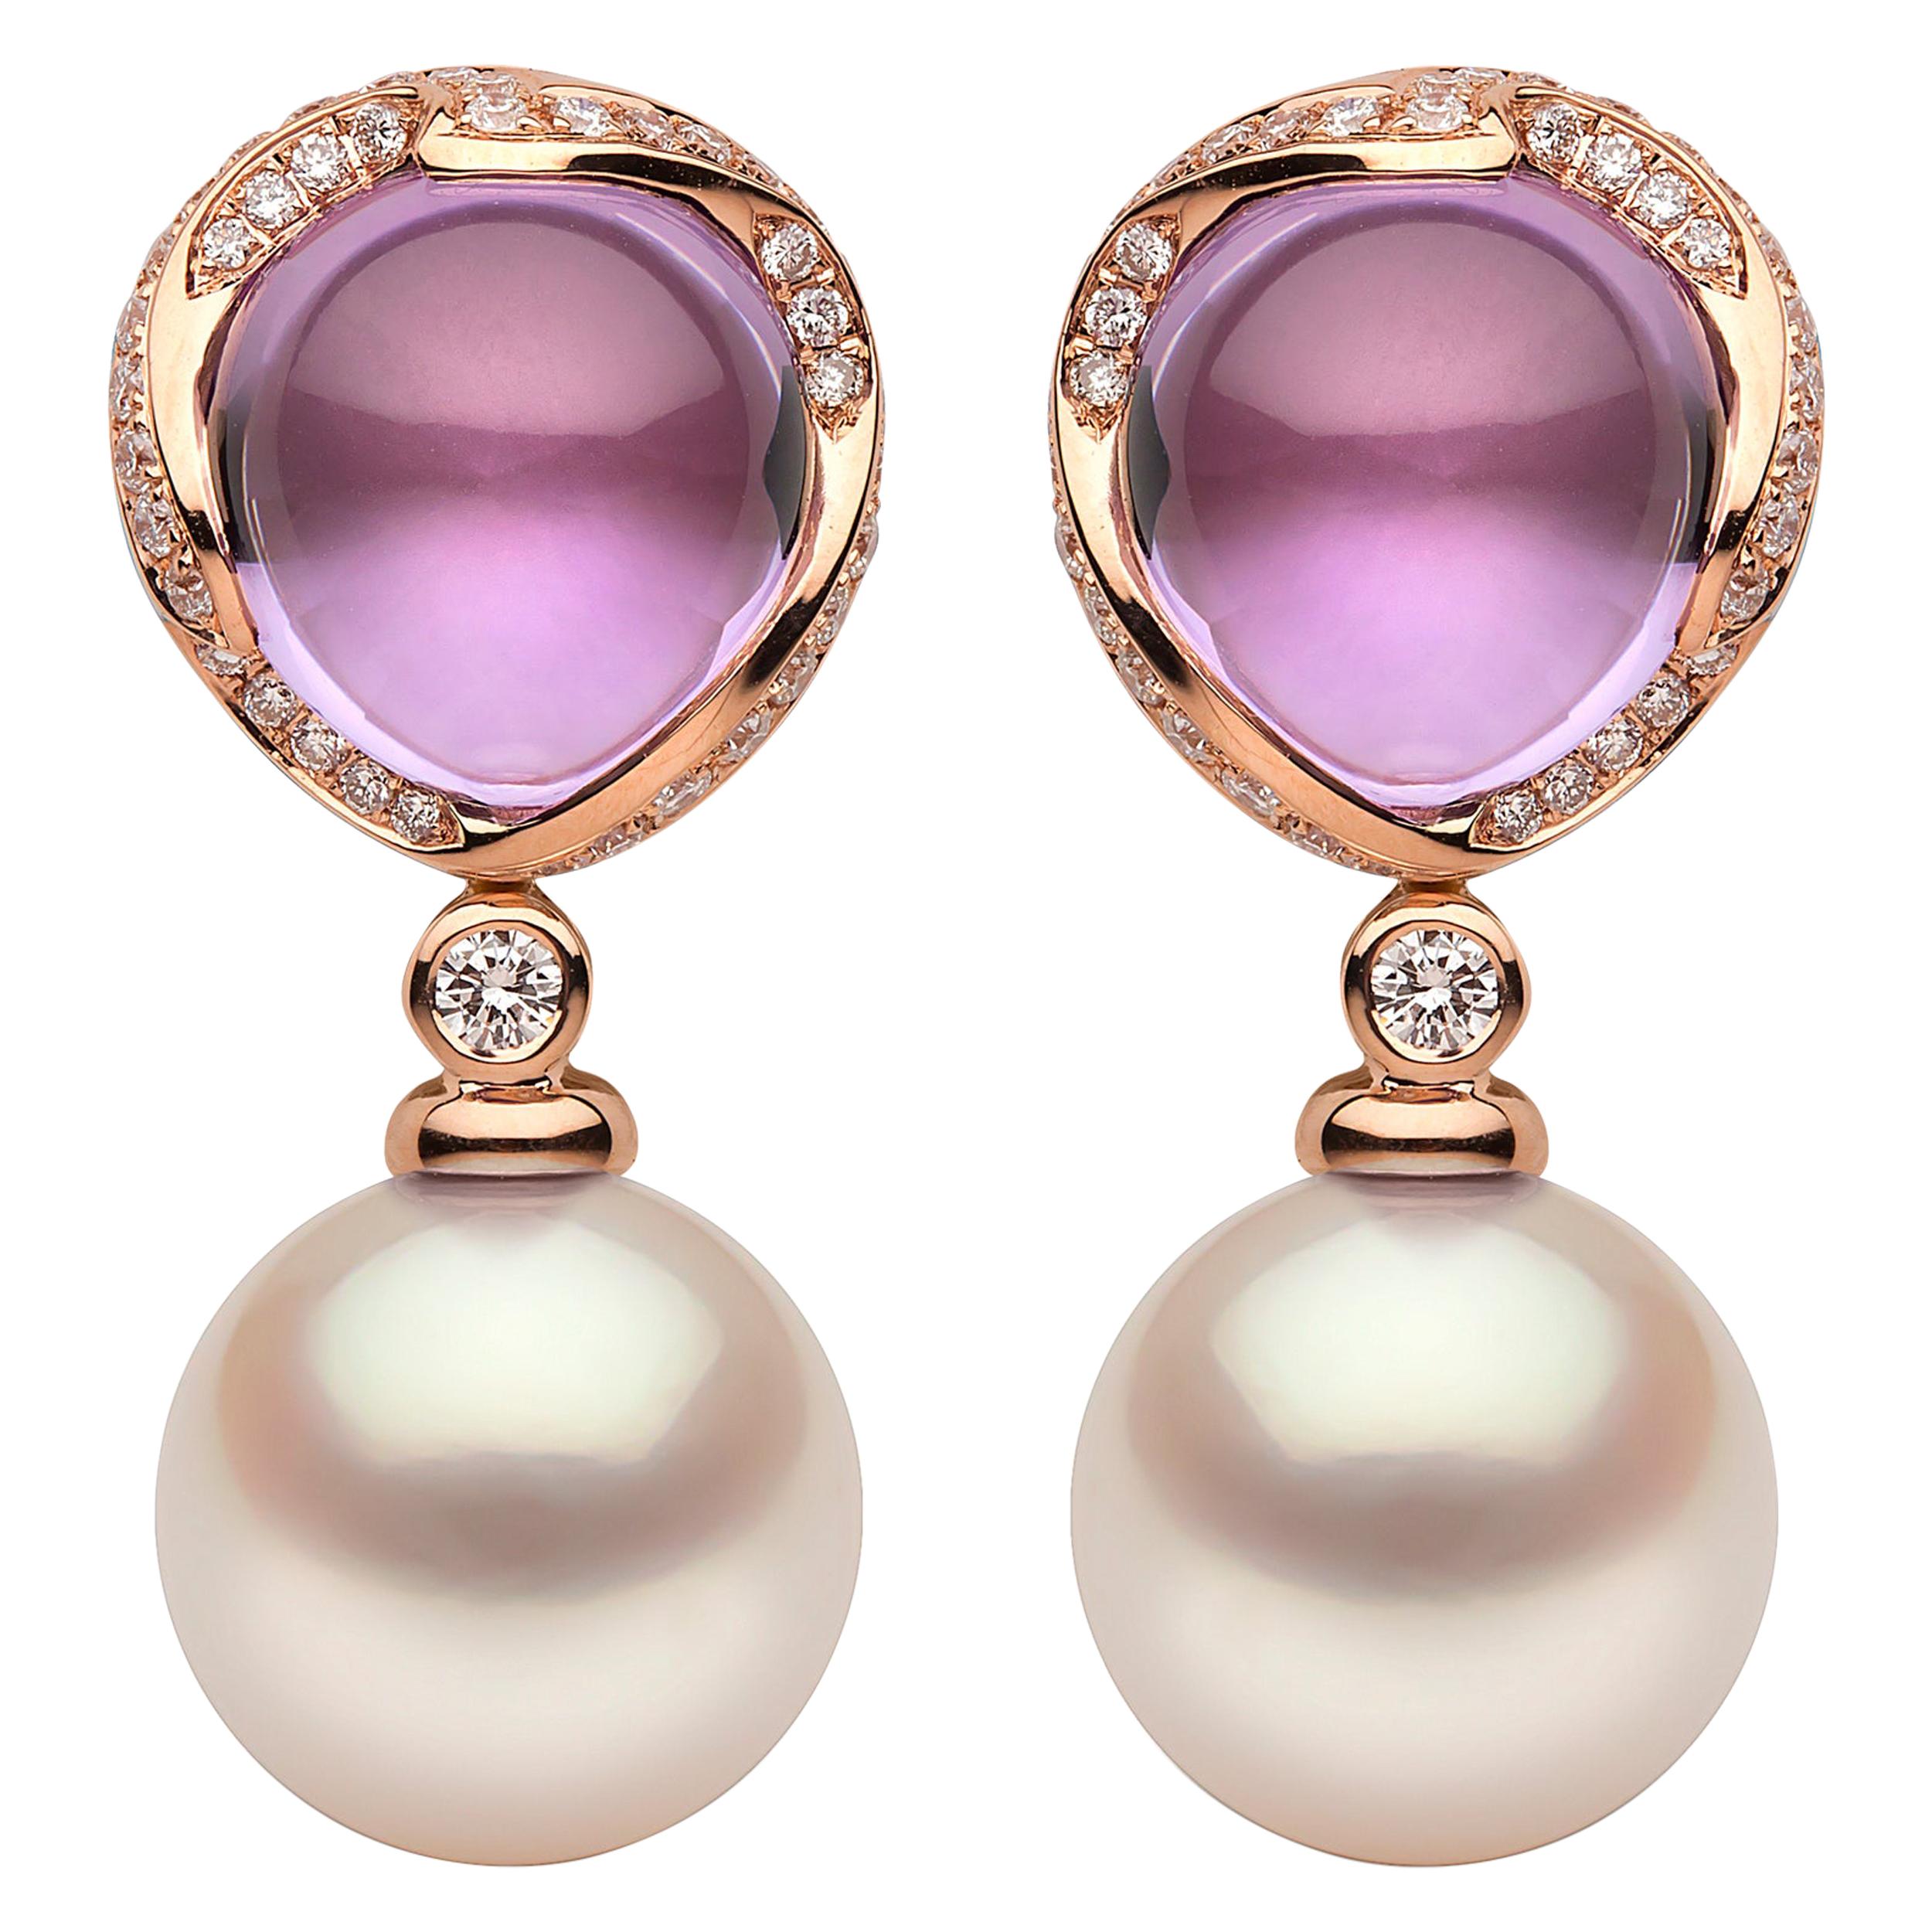 Yoko London South Sea Pearl, Amethyst and Diamond Earrings in 18 Karat Rose Gold